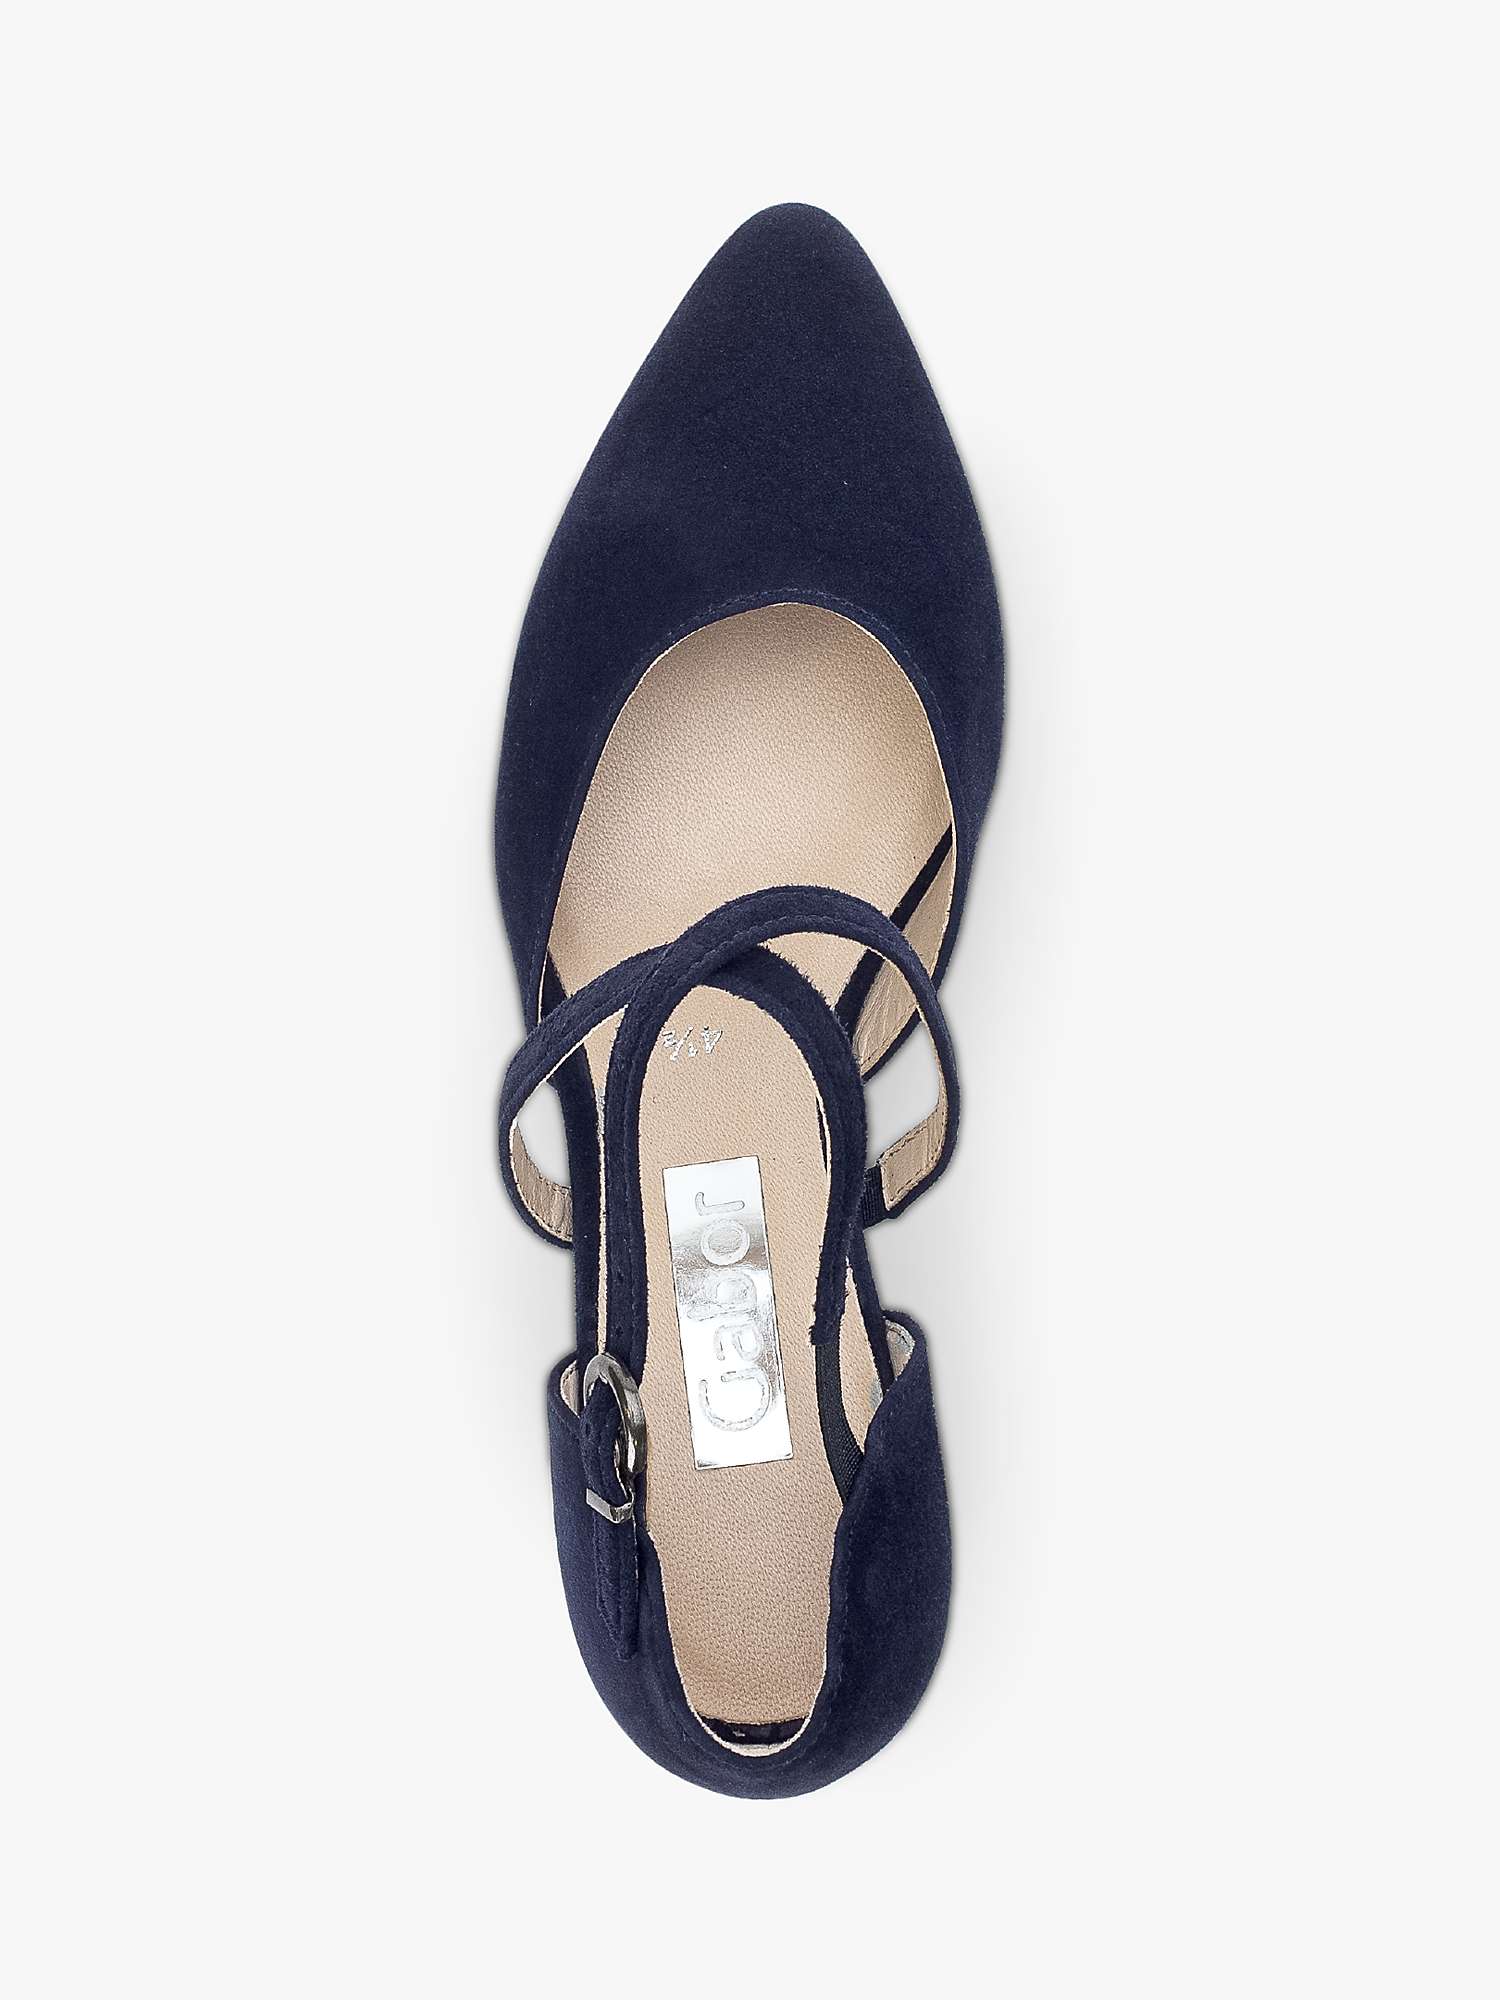 Buy Gabor Gisele Suede Cross Strap Court Shoes, Atlantic Online at johnlewis.com